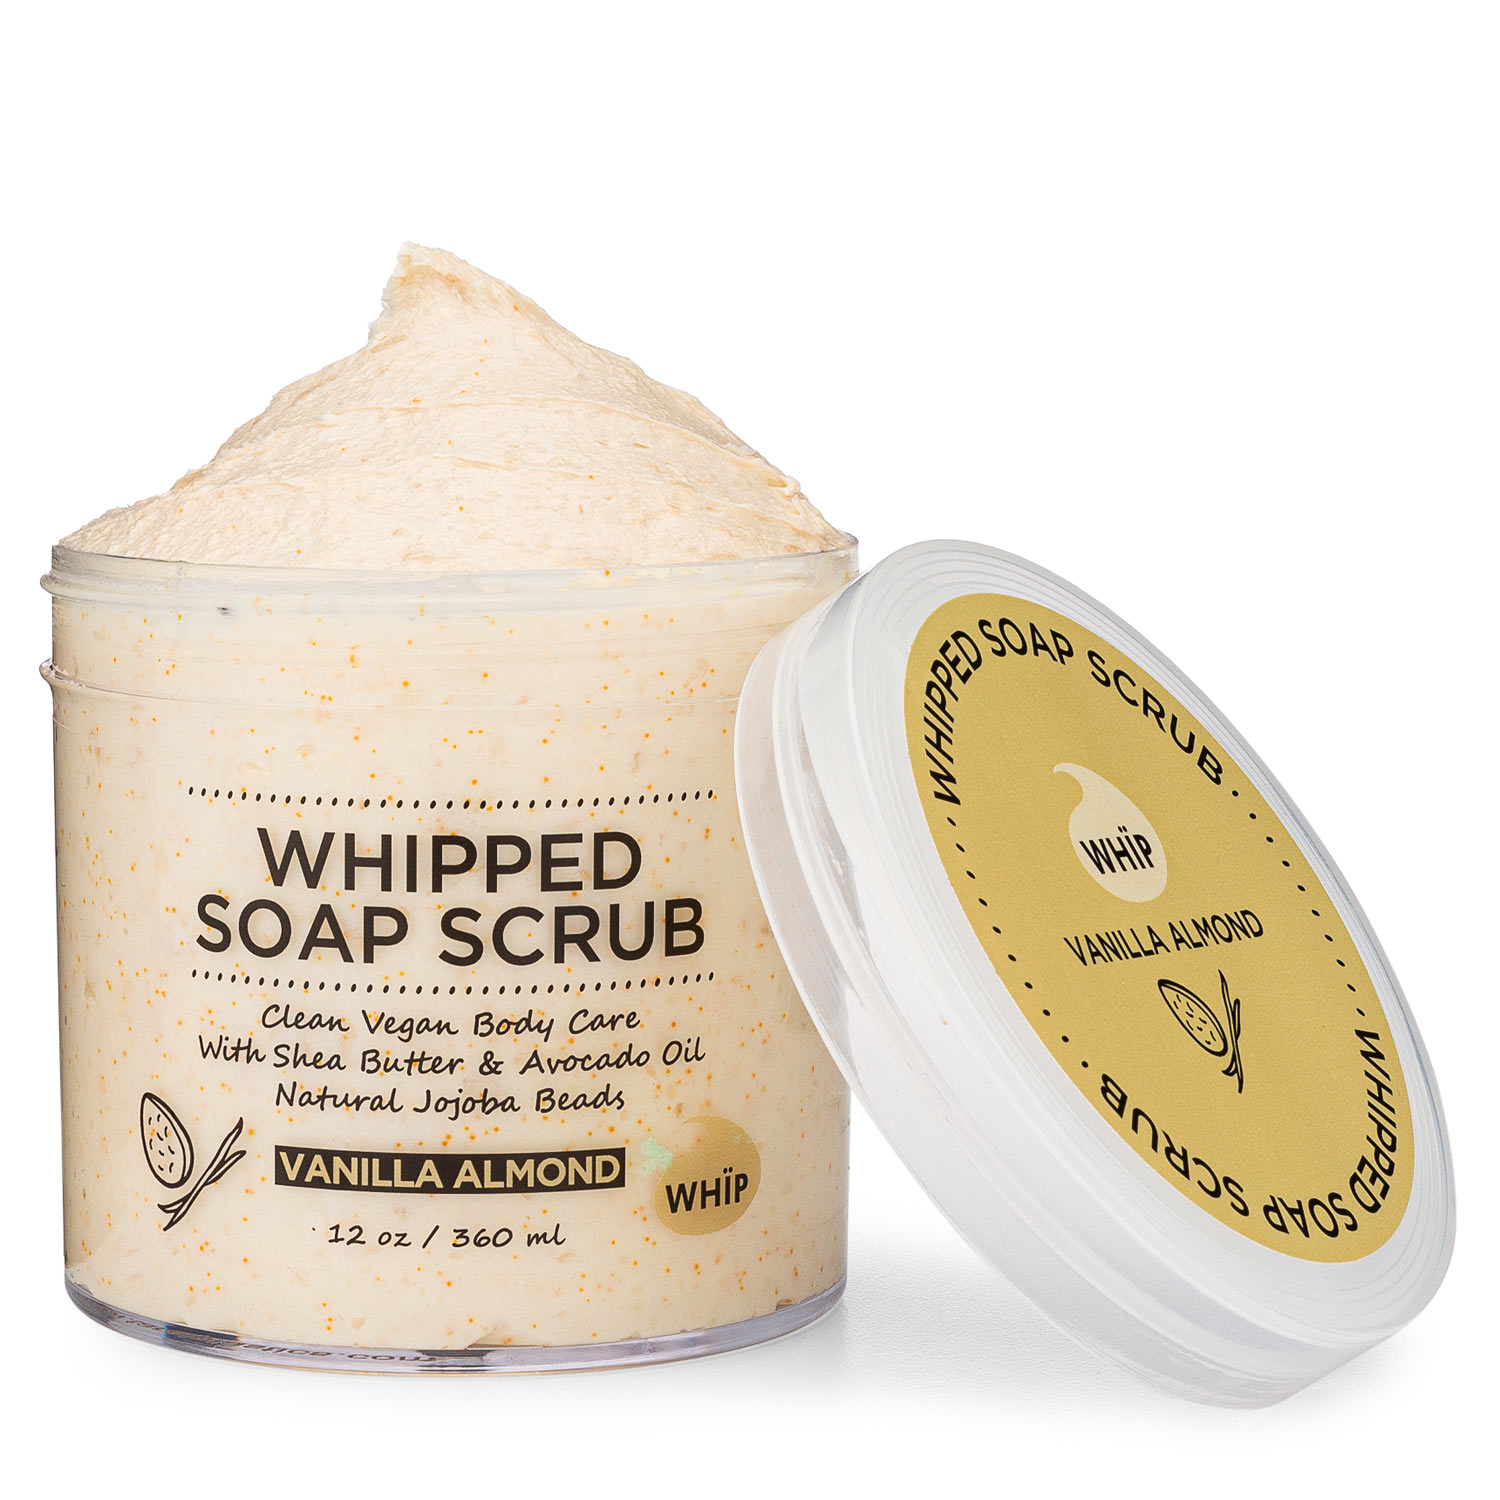 Whipped Soap Scrub - Vanilla Almond WHÏP Image